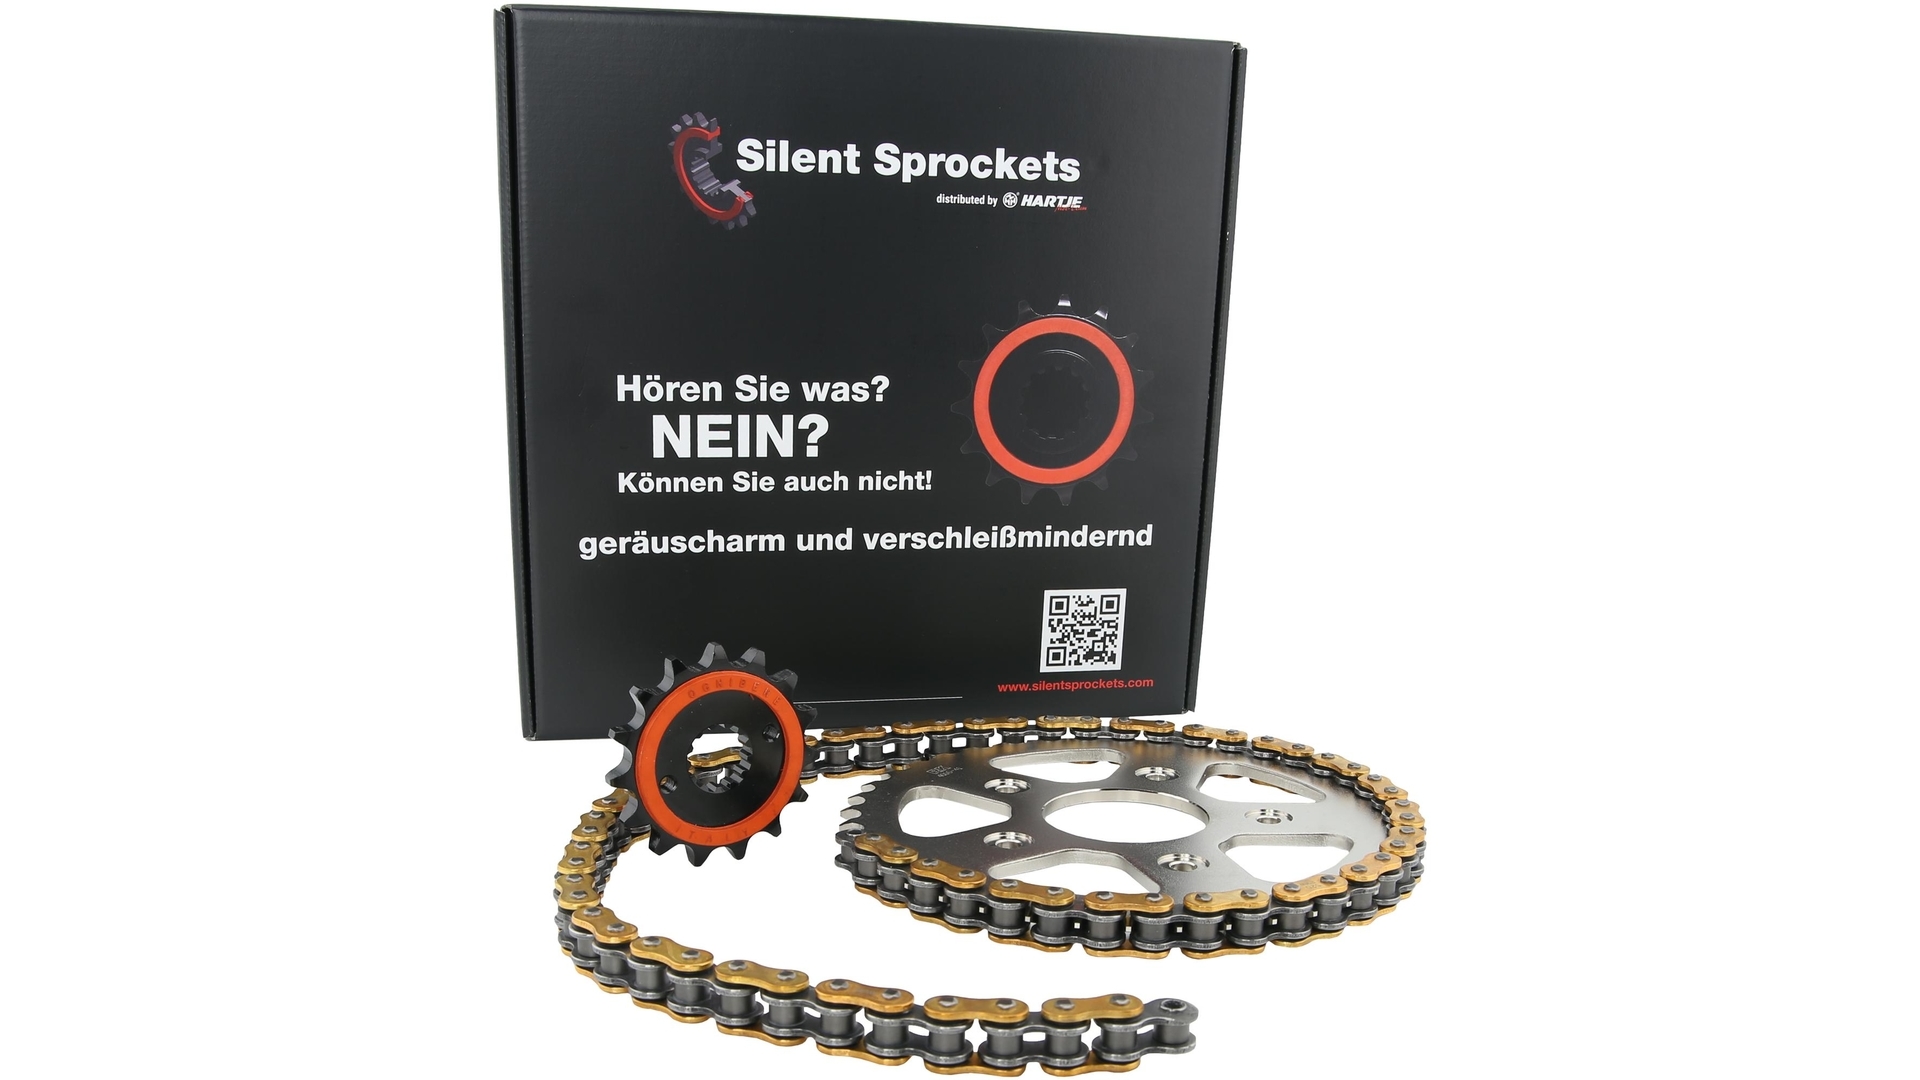 RK Kettensatz Standard, GB530ZXW, XW-Ring, Kettensatz Übersetzung: 16-40-104/530 Ritzel: Stahl